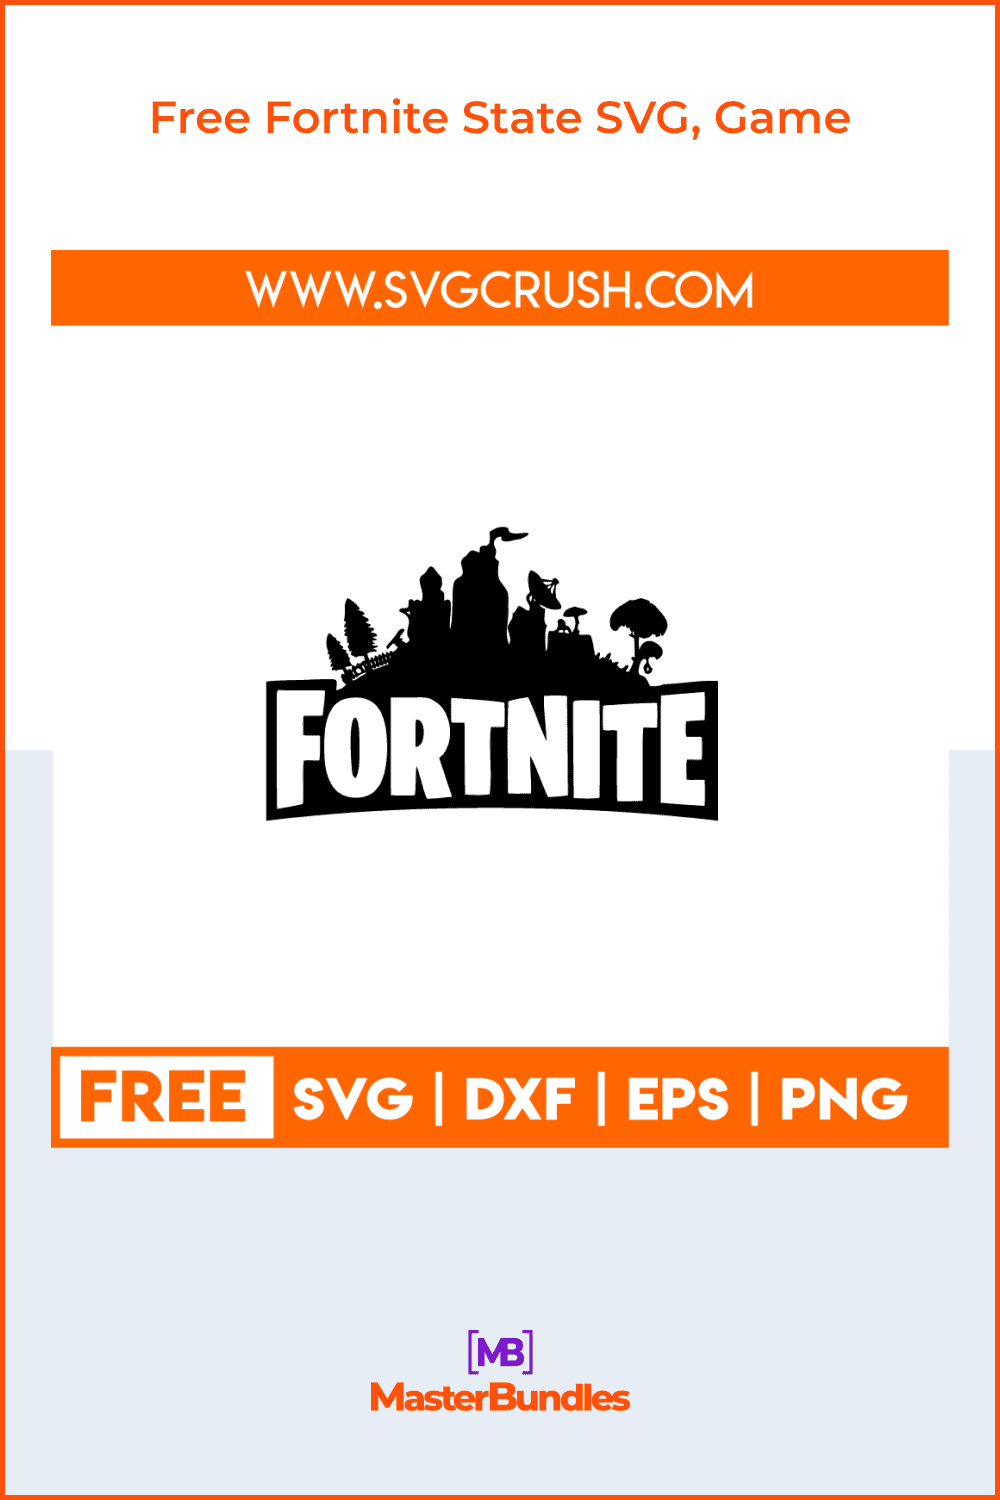 Free fortnite state SVG, game.